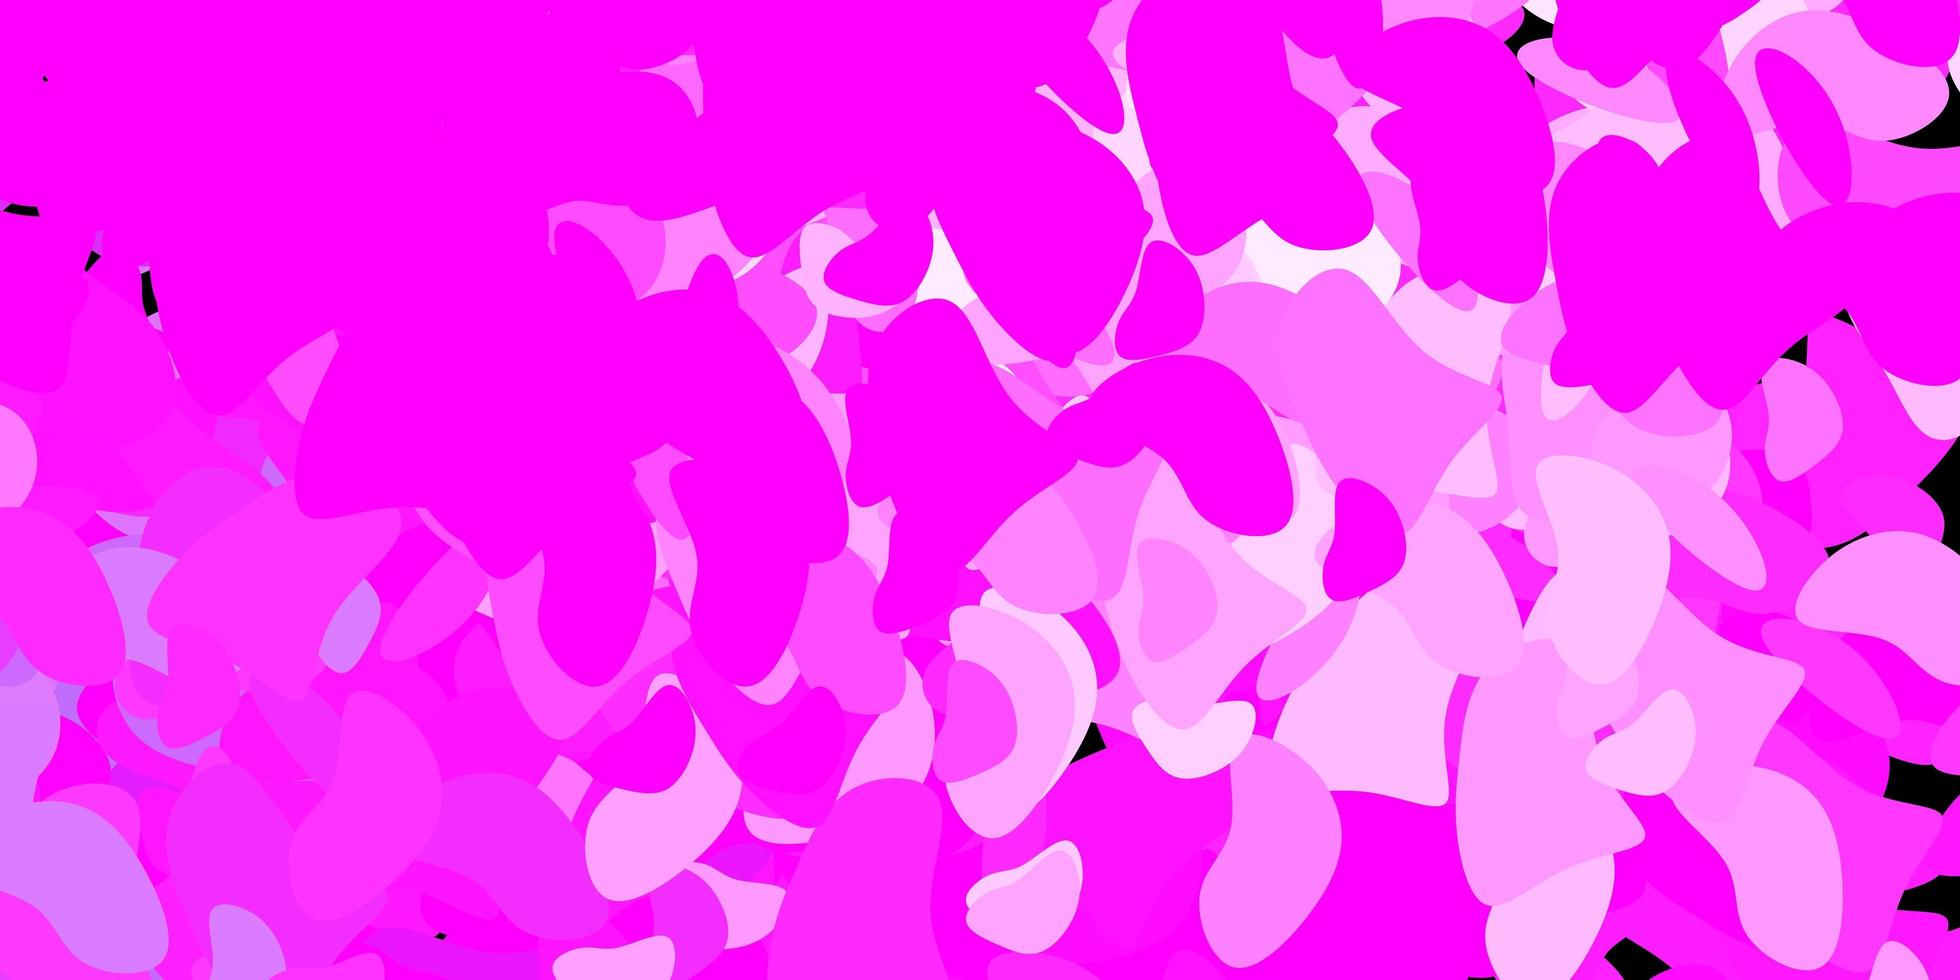 ljuslila, rosa vektorstruktur med memphis-former. vektor